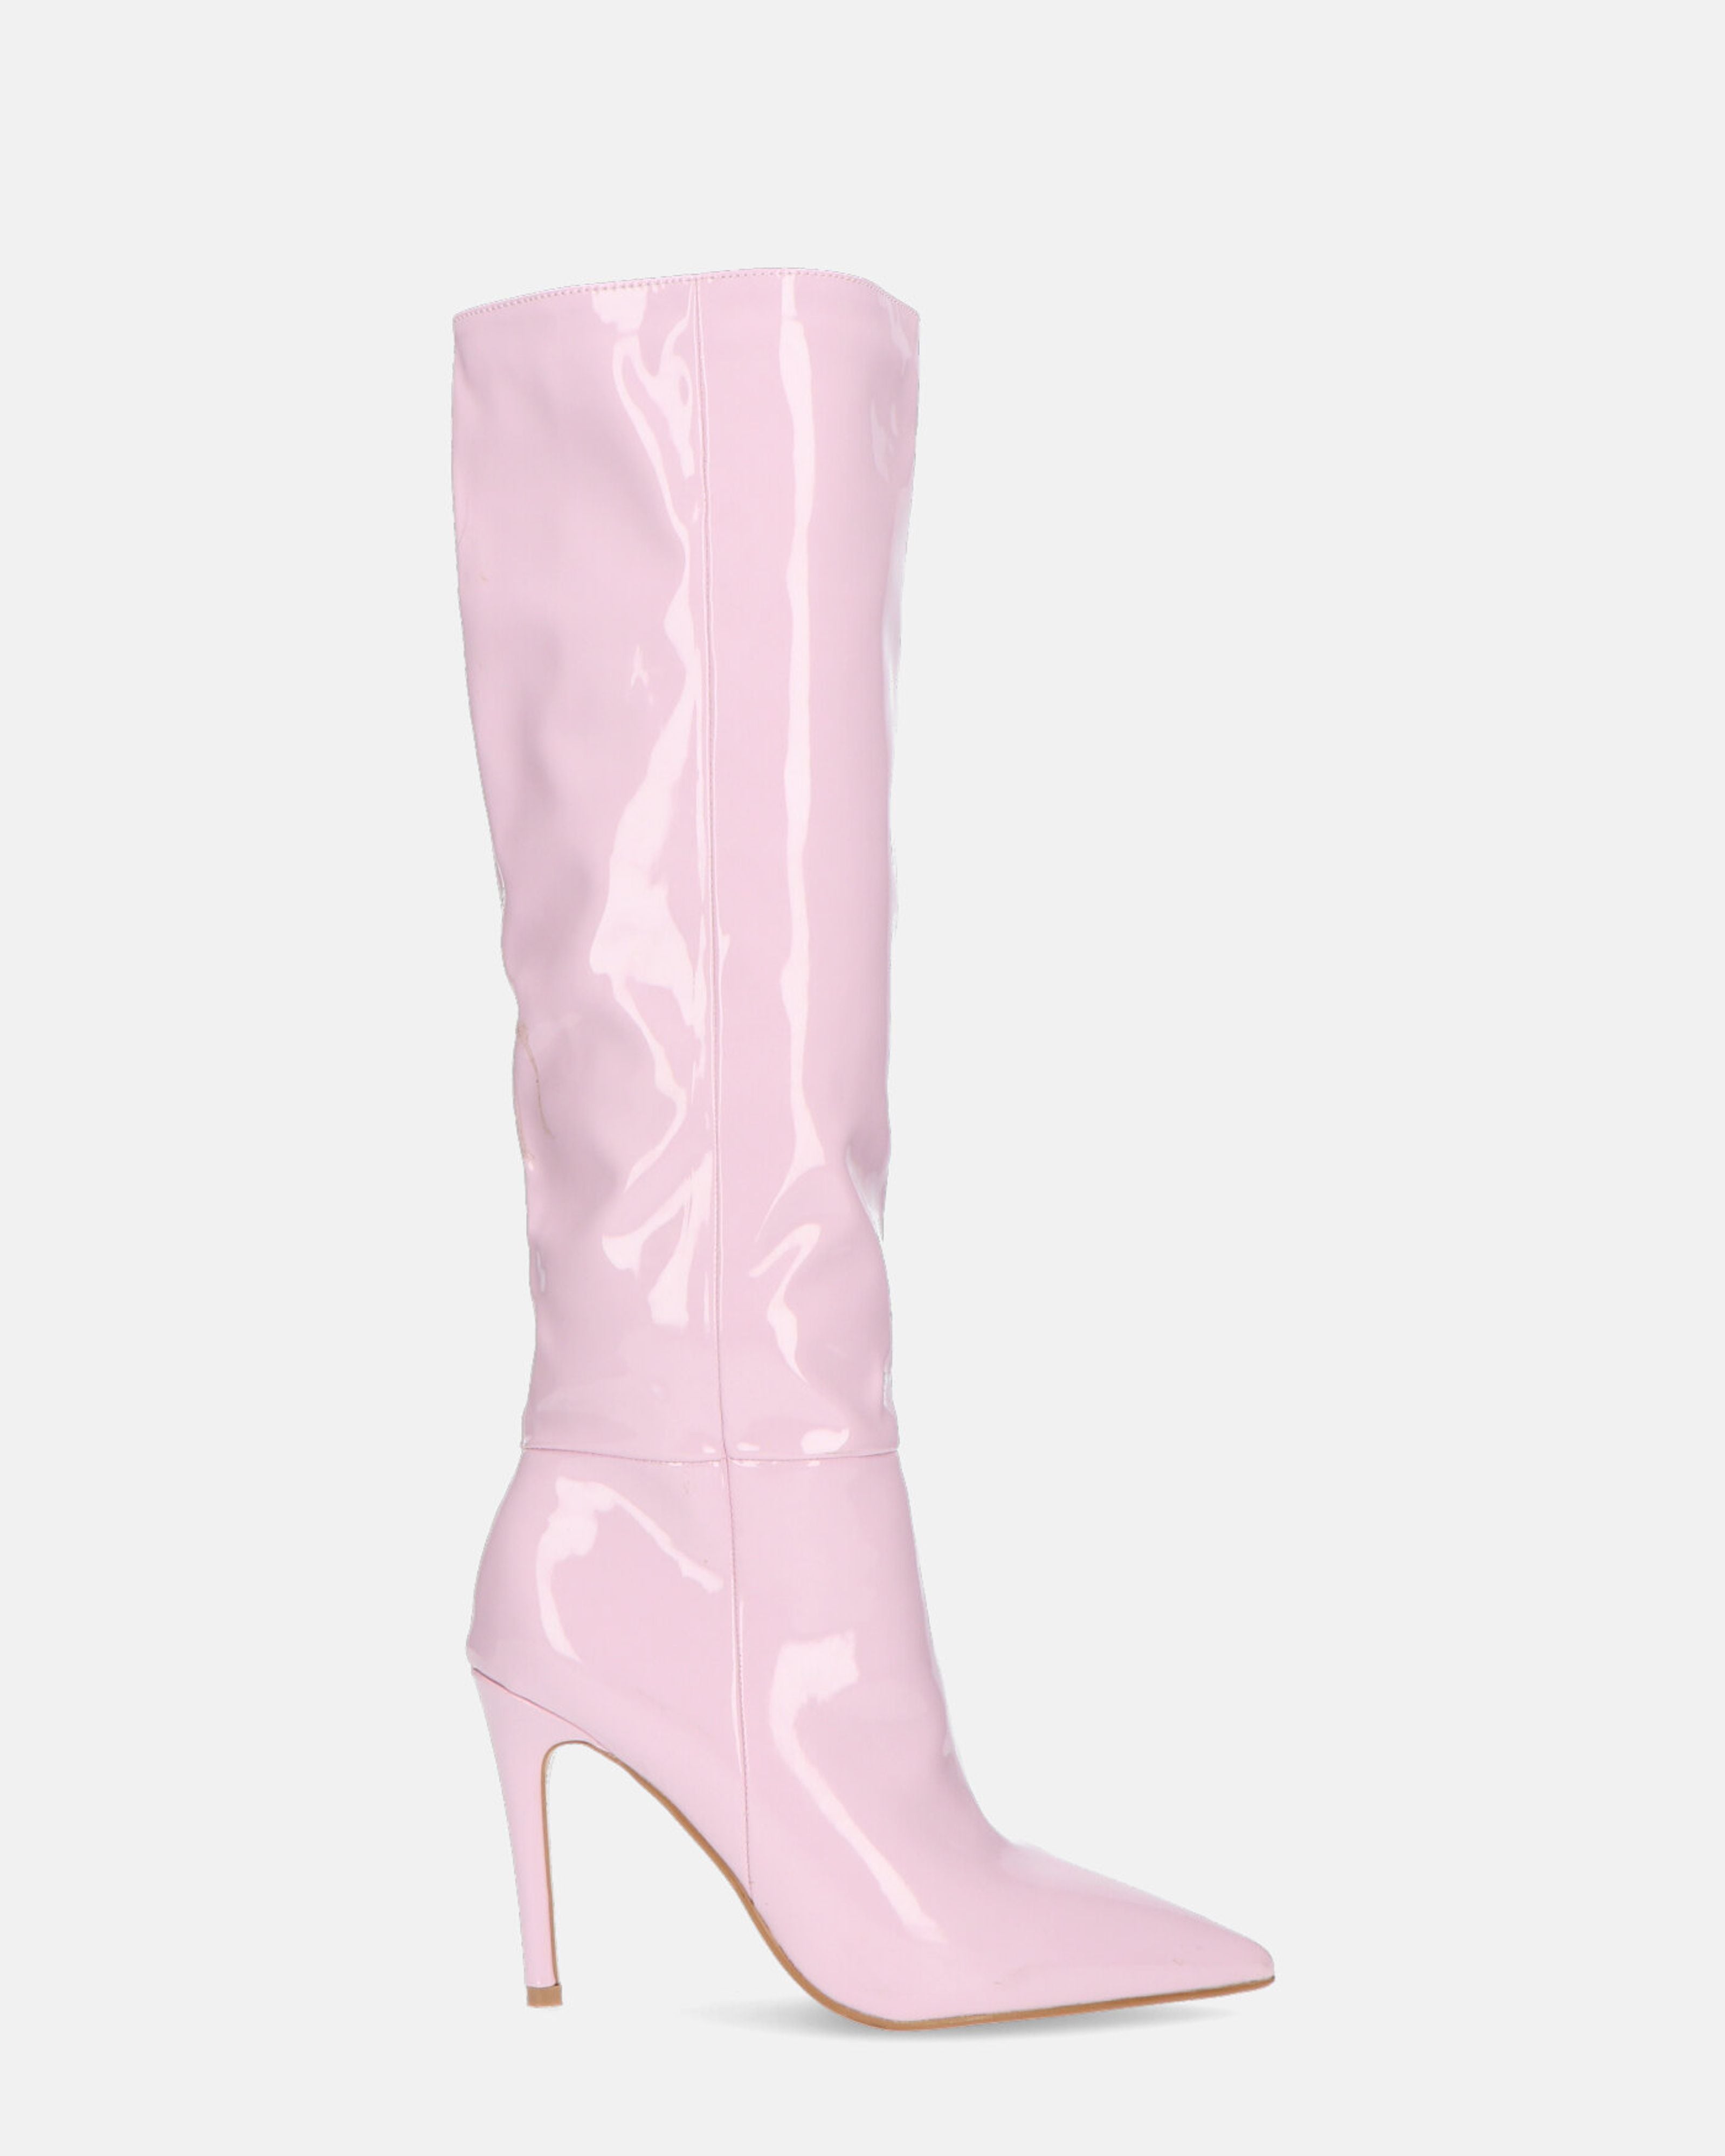 LOLY - violet glassy heel boot